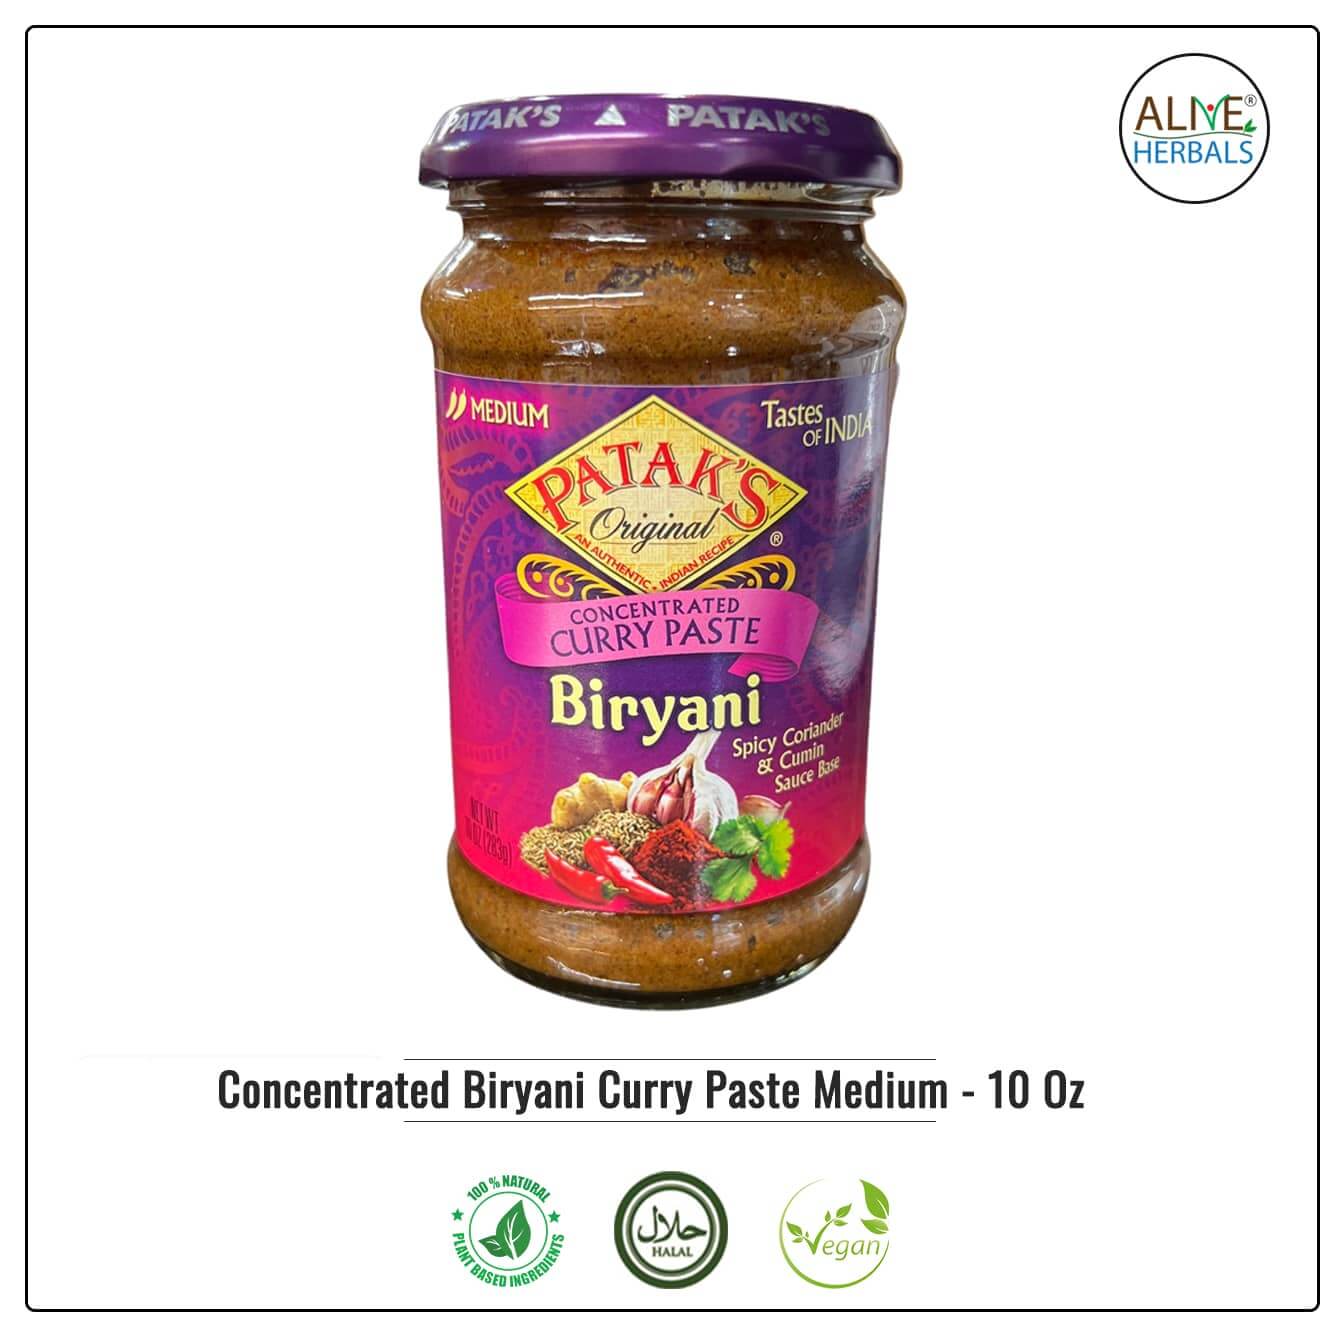 Concentrated Biryani Curry Paste Medium - Alive Herbals